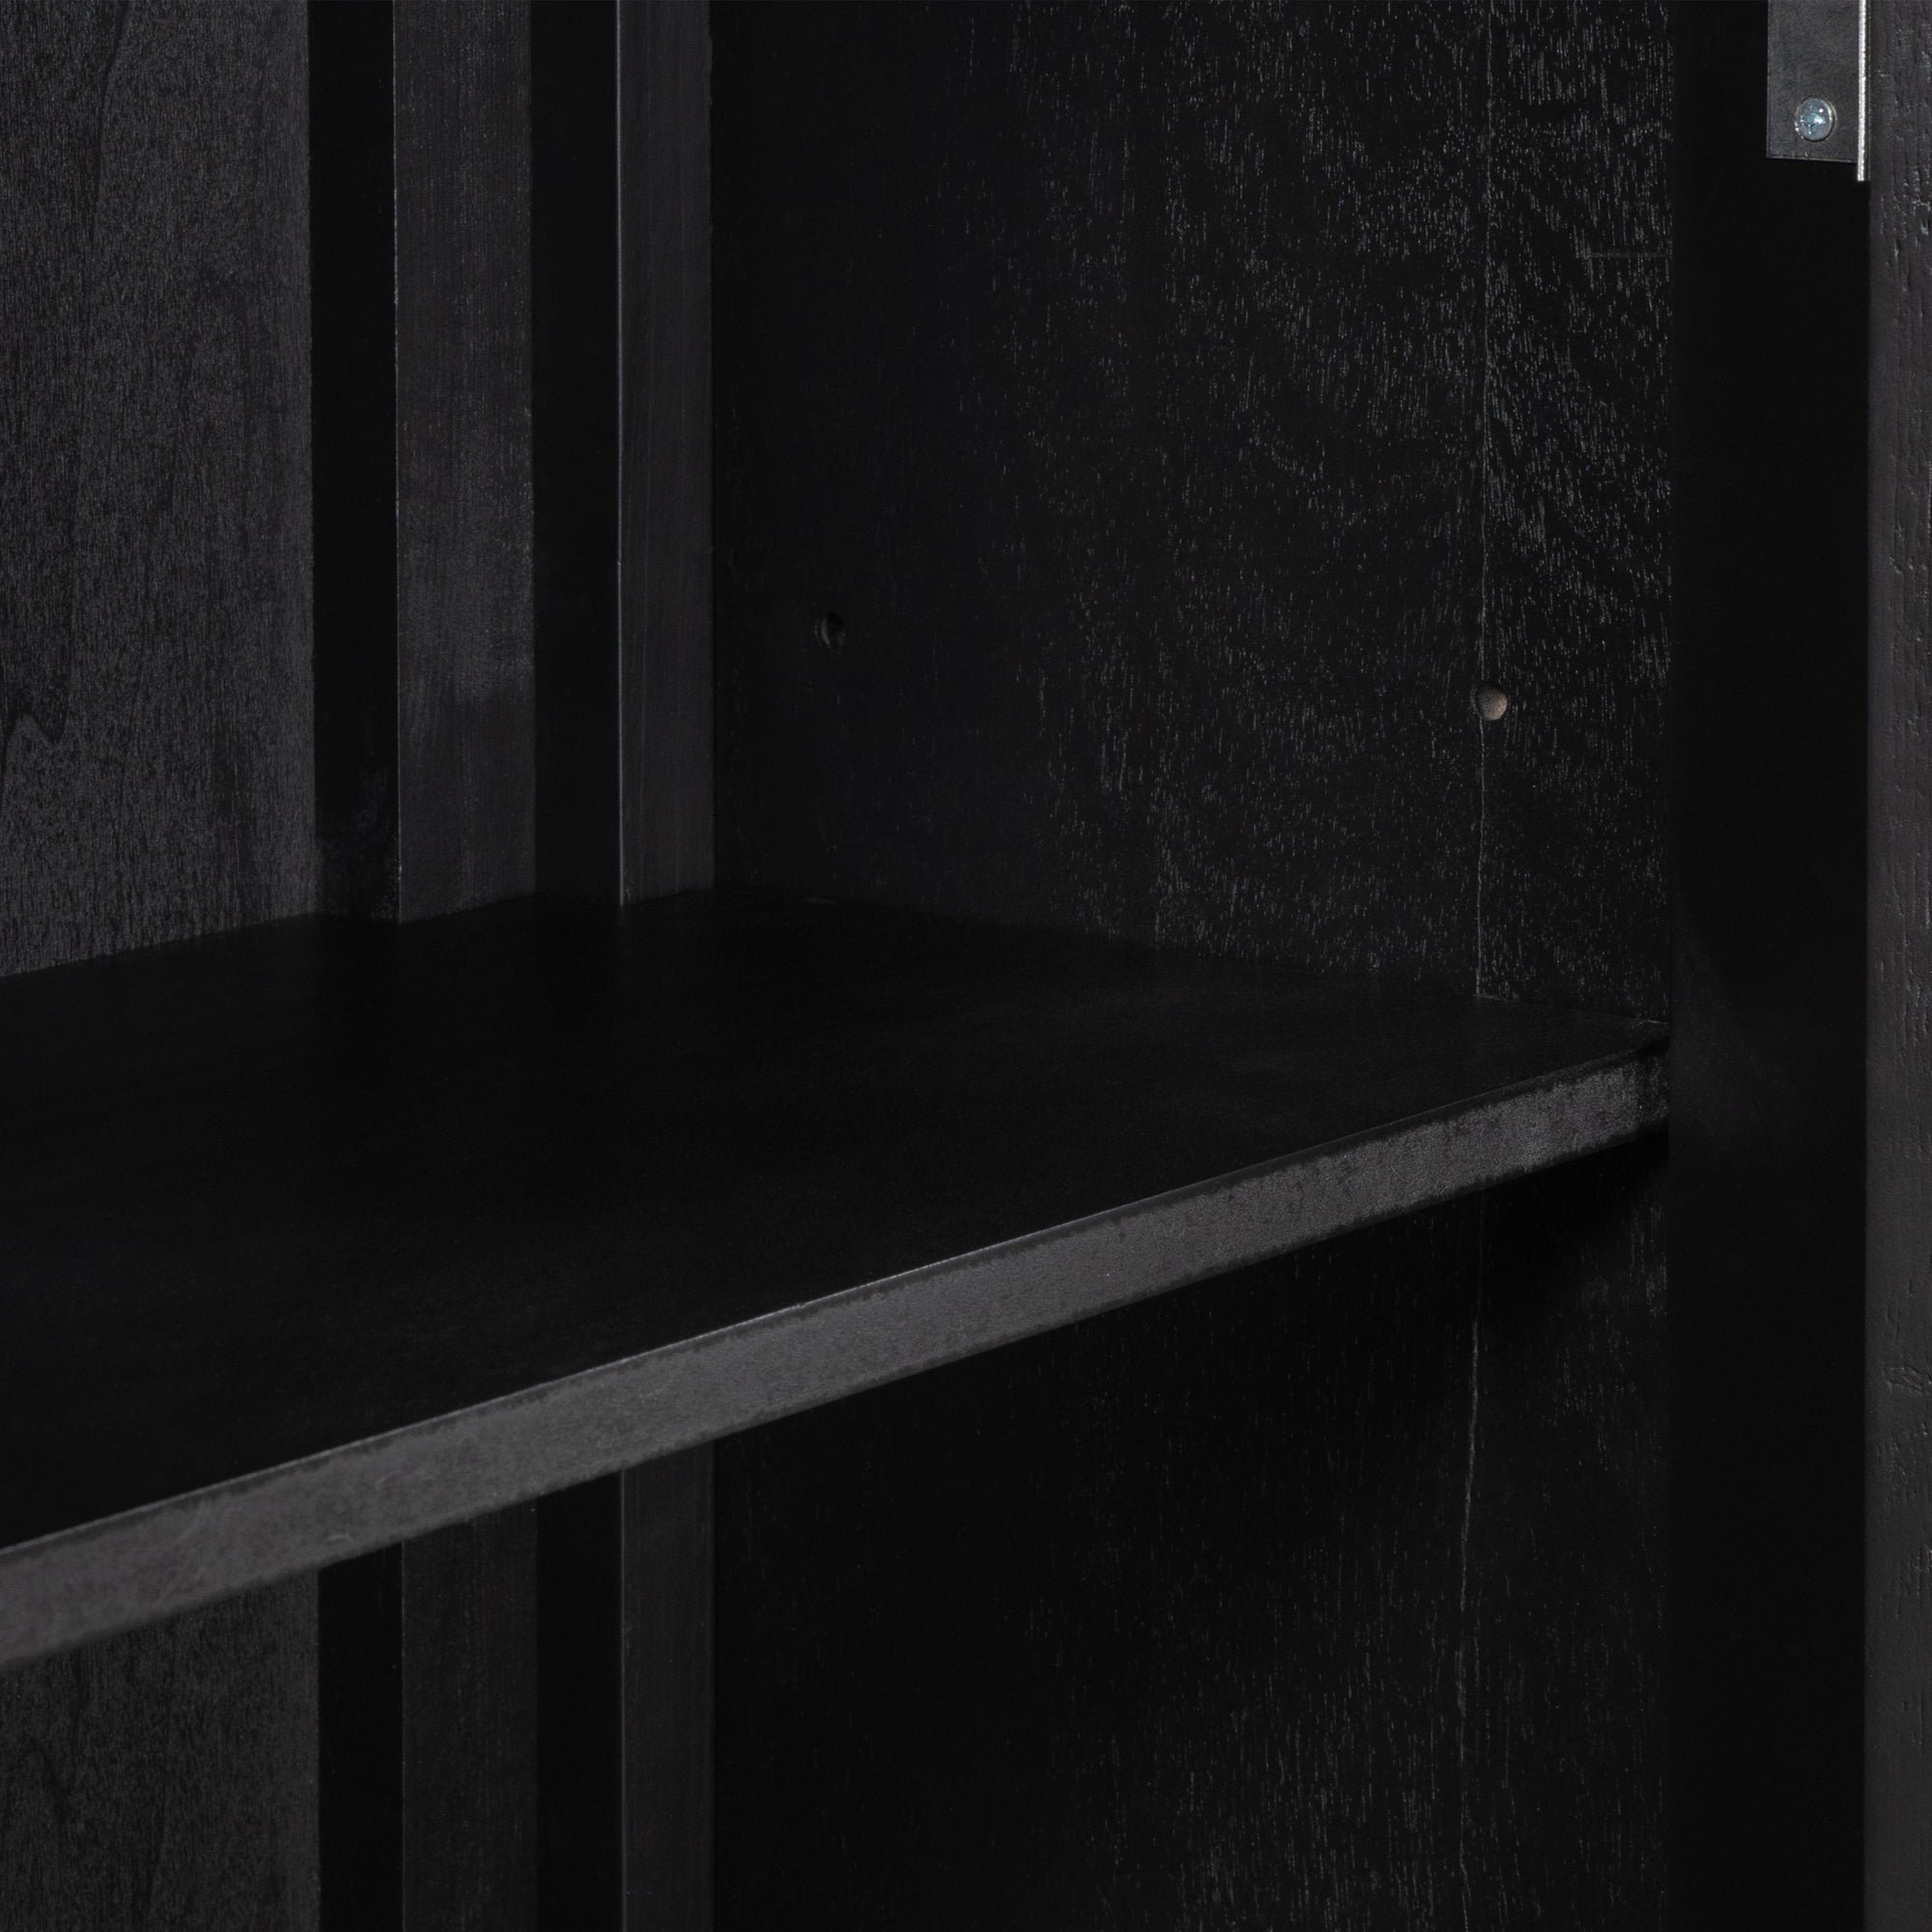 Accent Storage Cabinet Wooden Cabinet with Adjustable Shelf (Black)